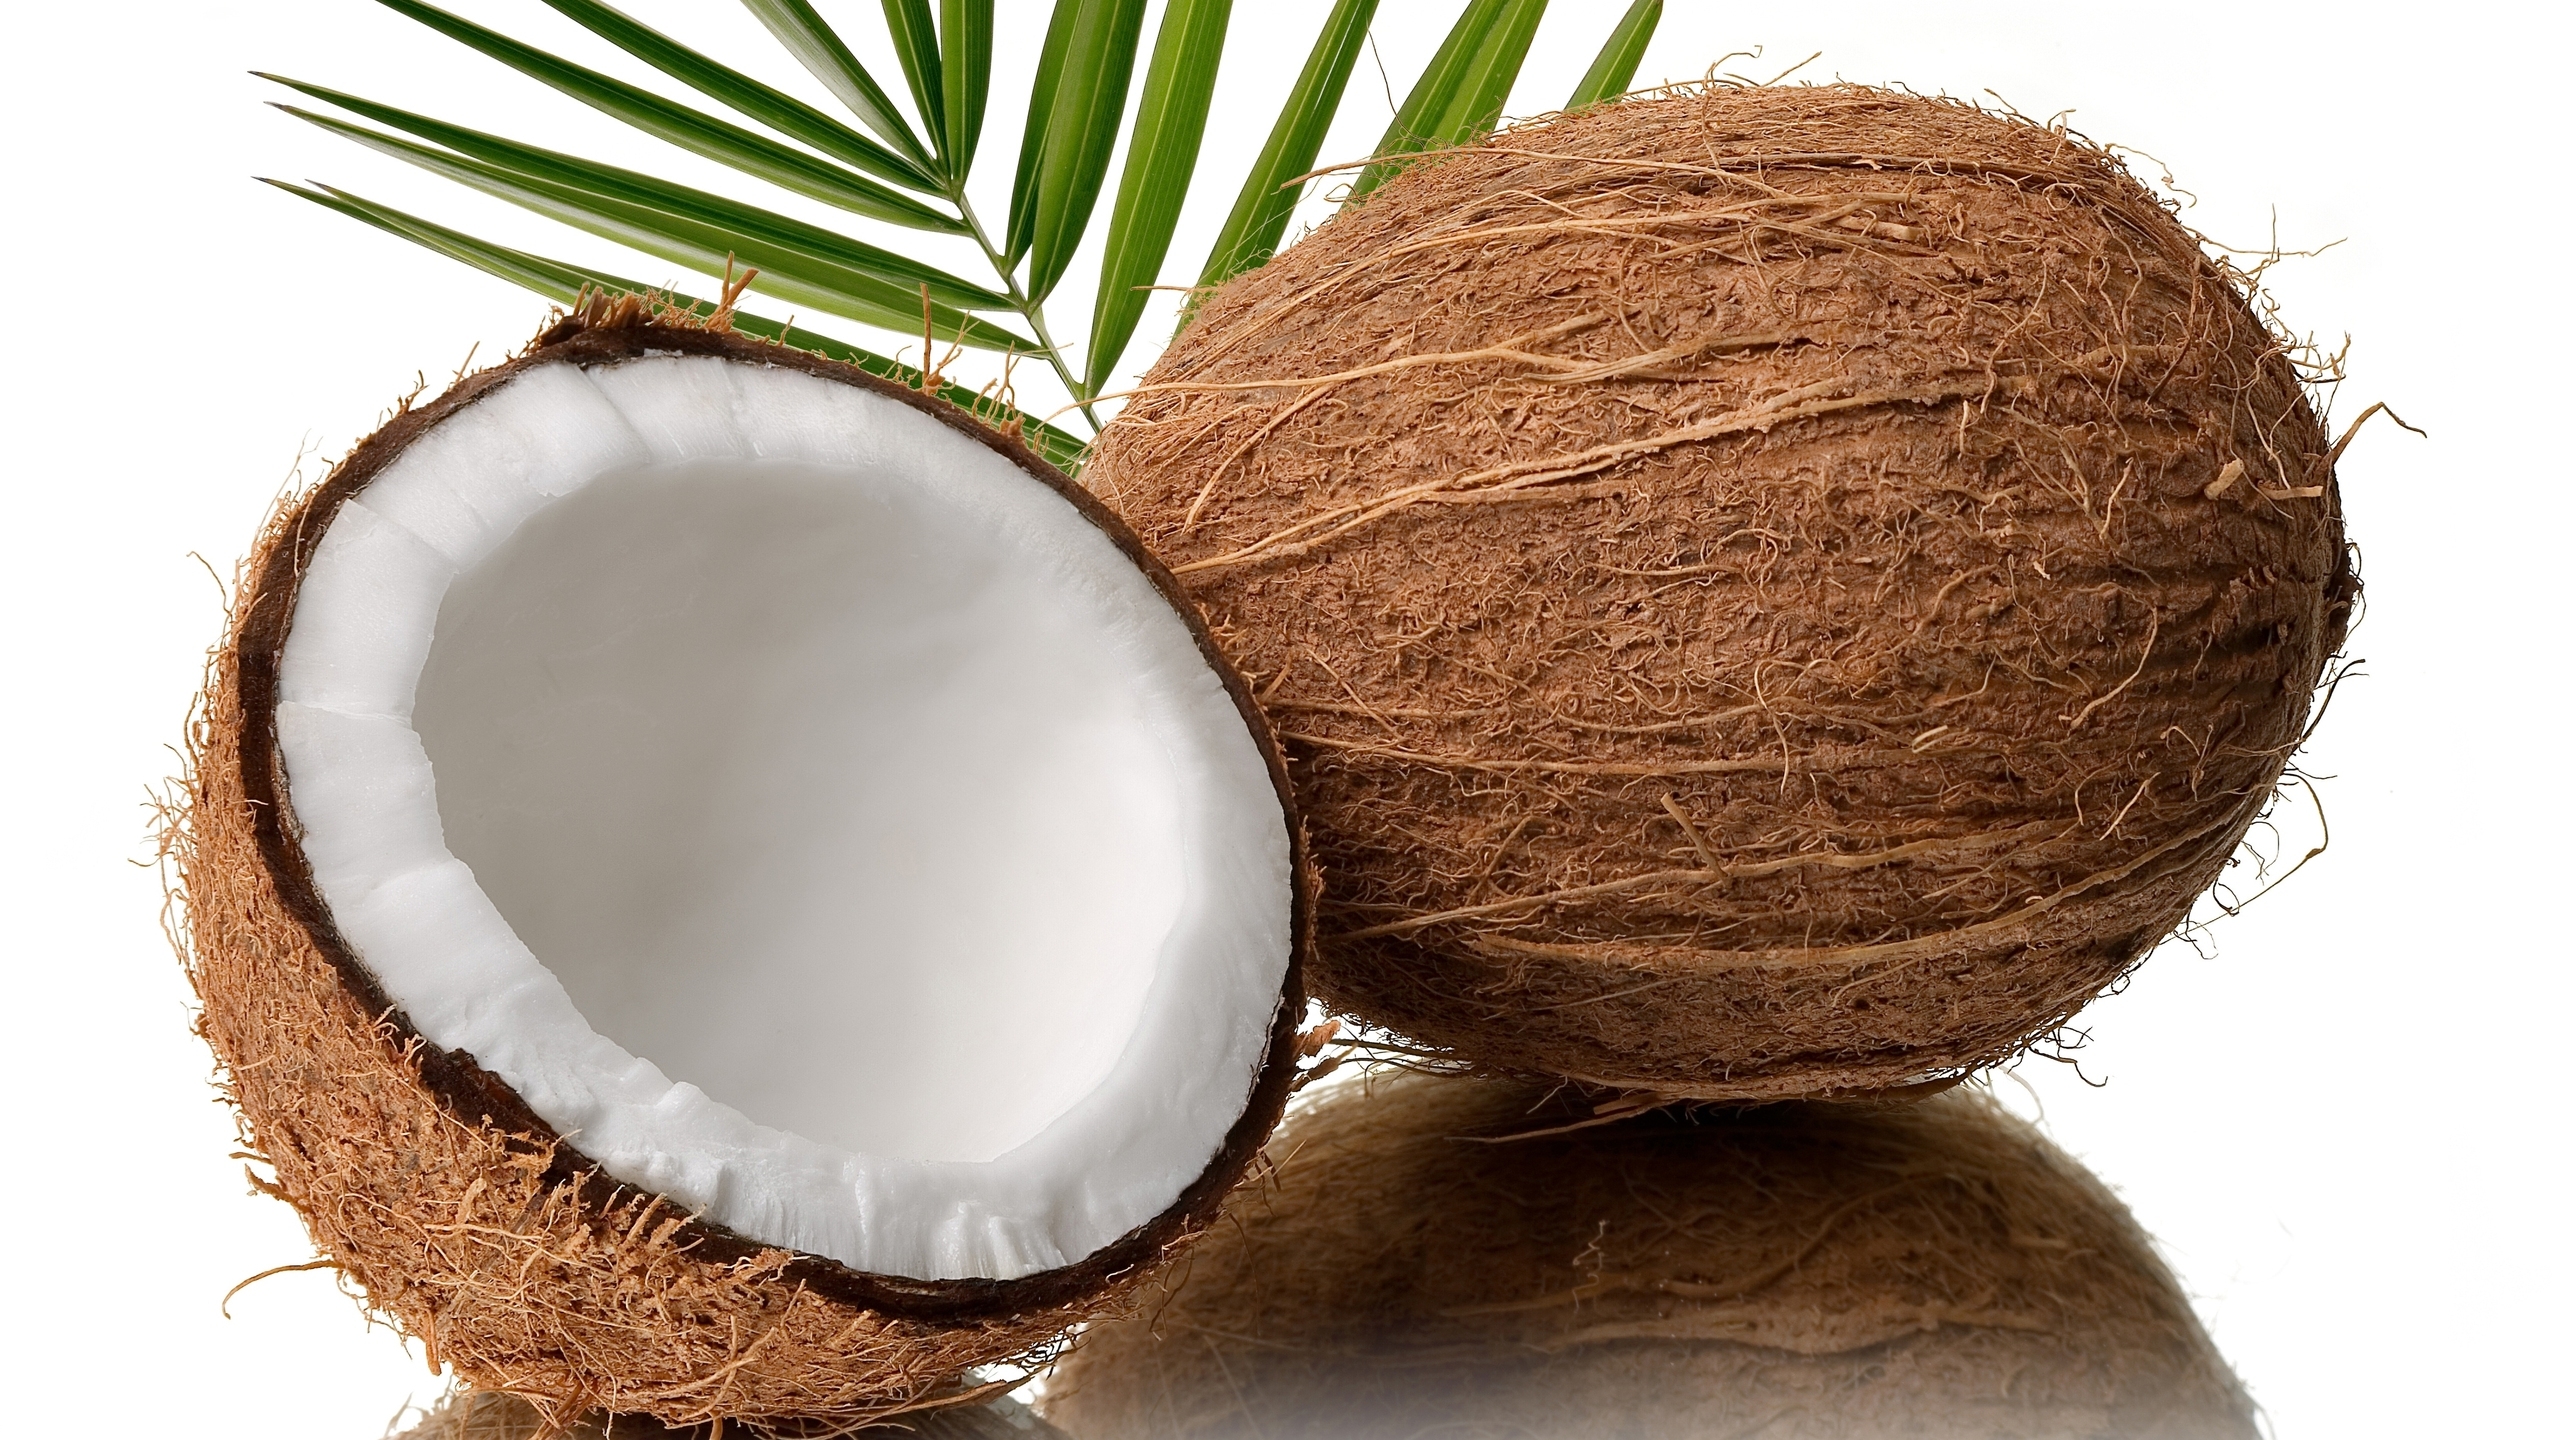 Detail Images Of Coconut Nomer 31